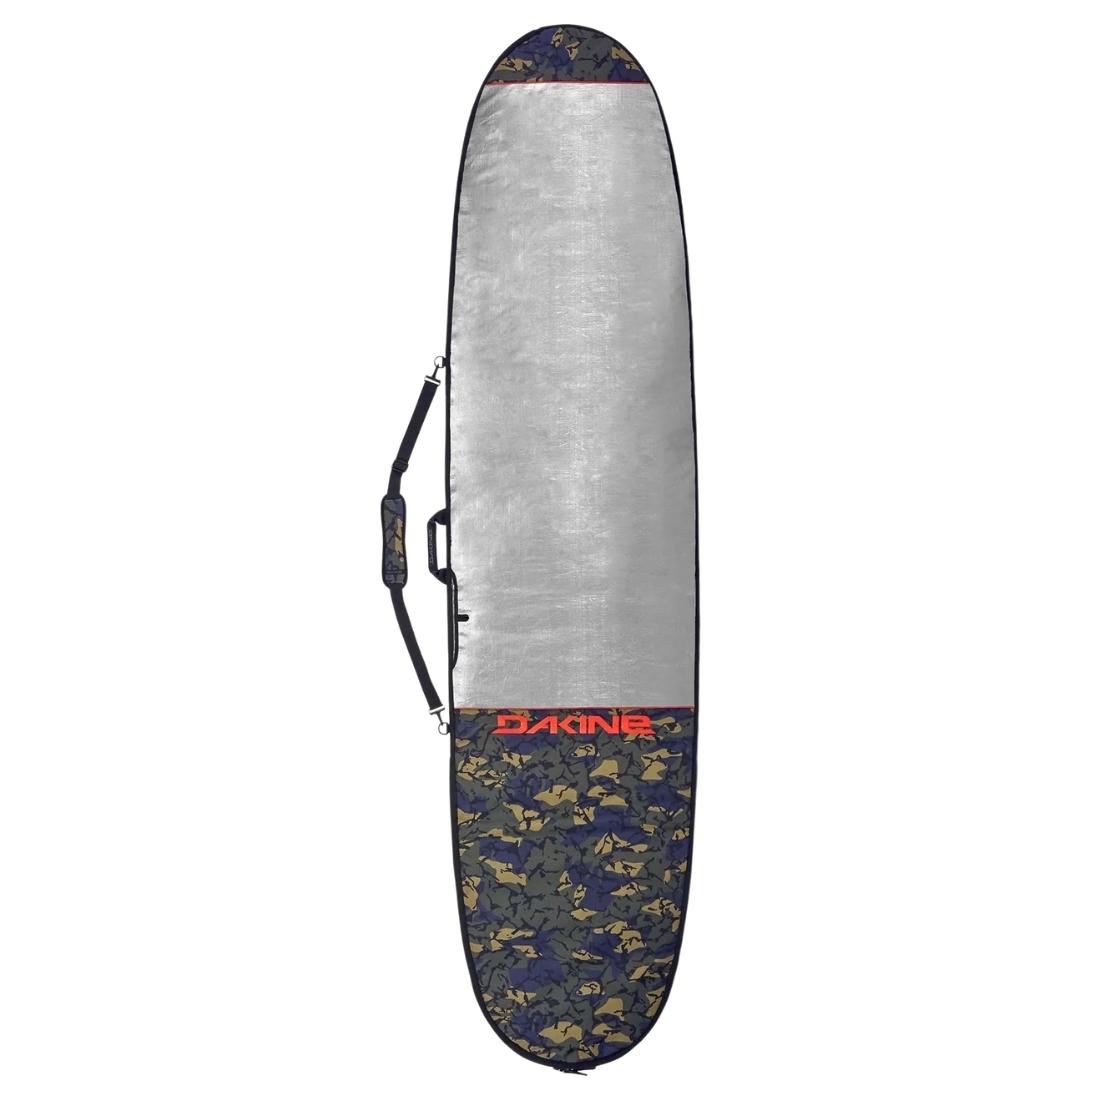 Dakine 8'0 Daylight Noserider Longboard Surfboard Bag - Cascade Camo - Surfboard Day Runner Bag/Cover by Dakine 8ft